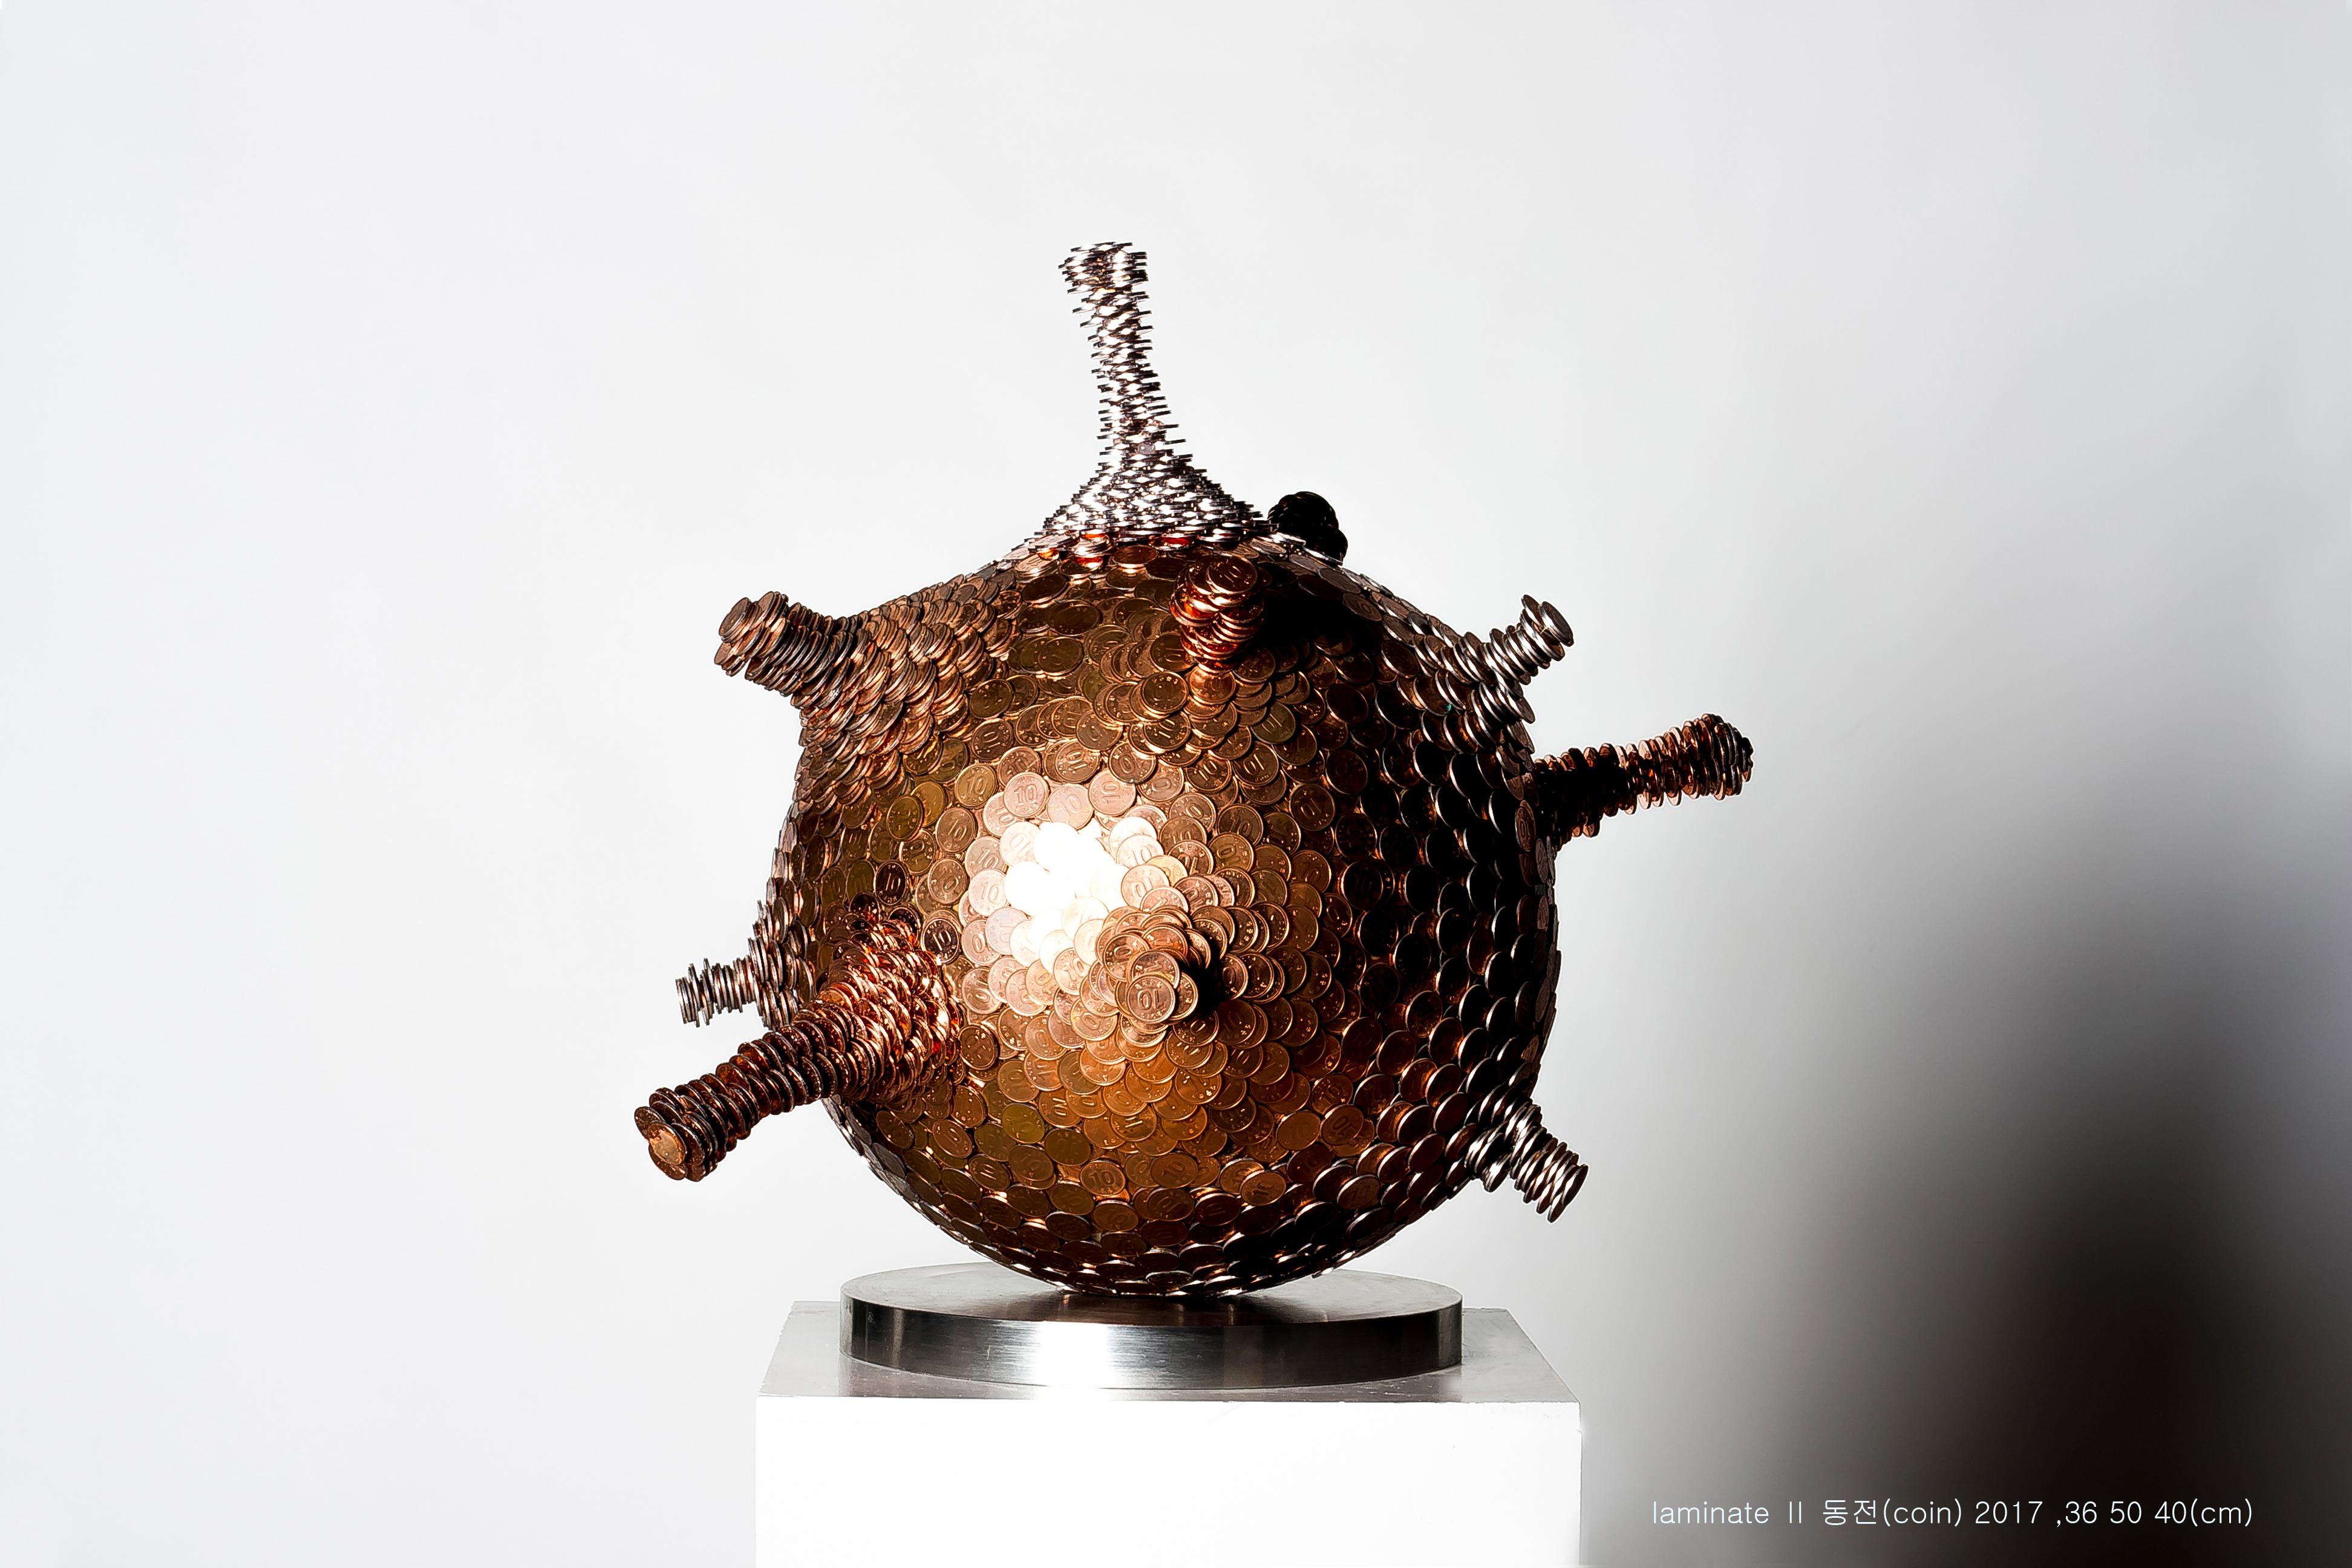 Kim Seungwoo Abstract Sculpture - Laminate II